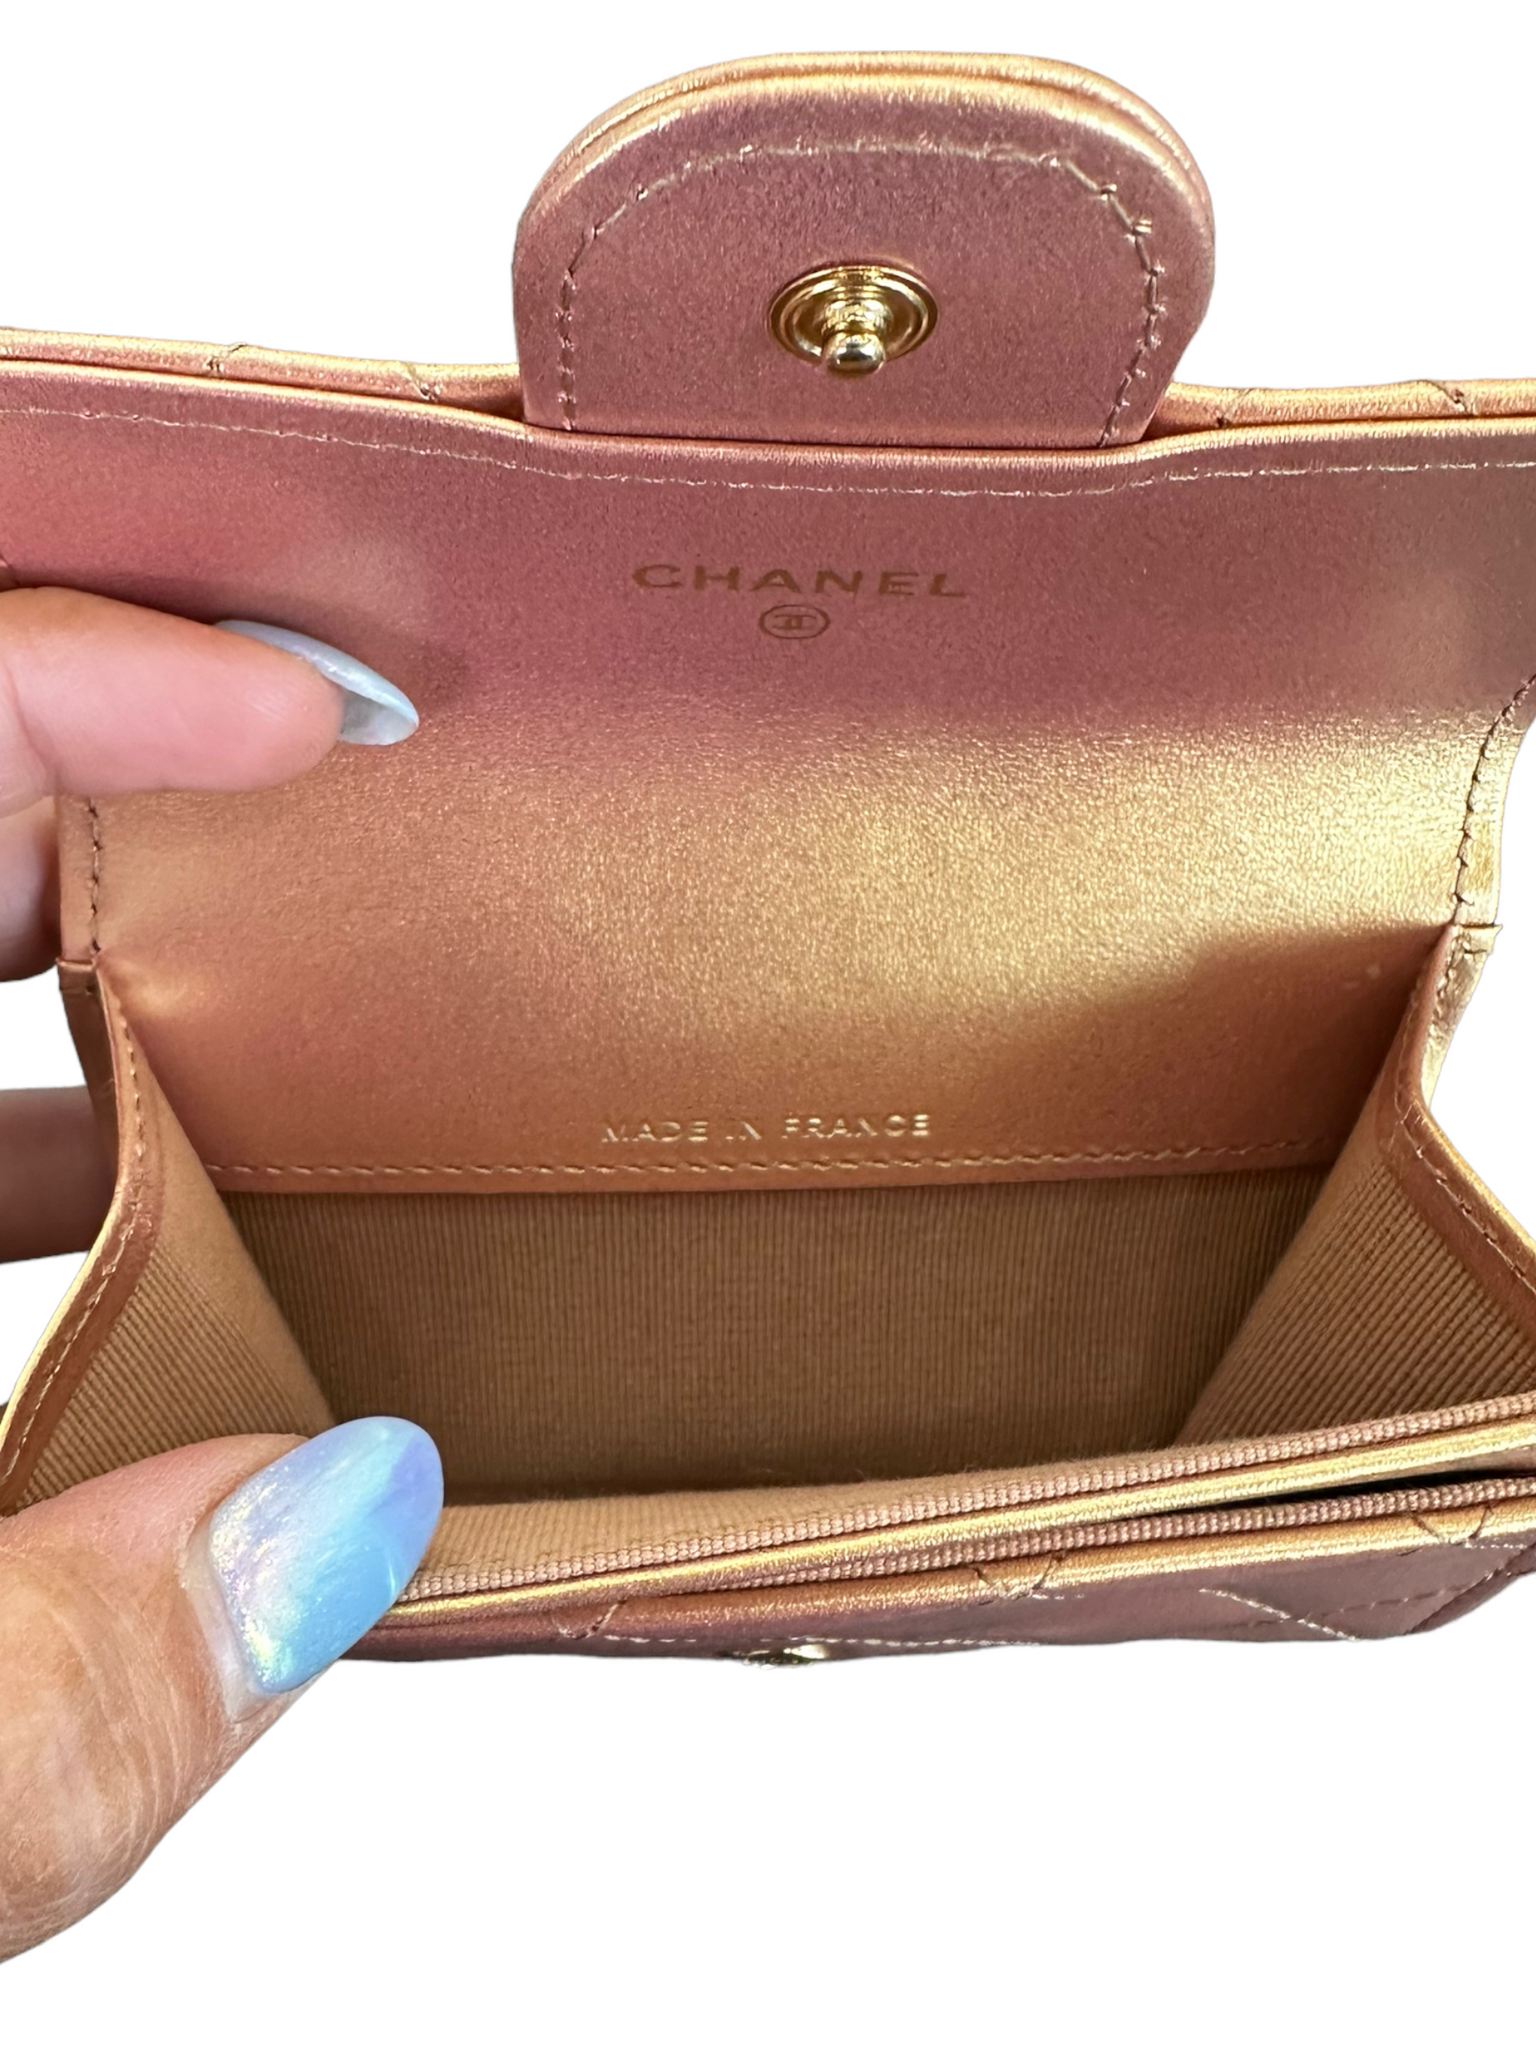 Chanel Card Holder - Coin Purse